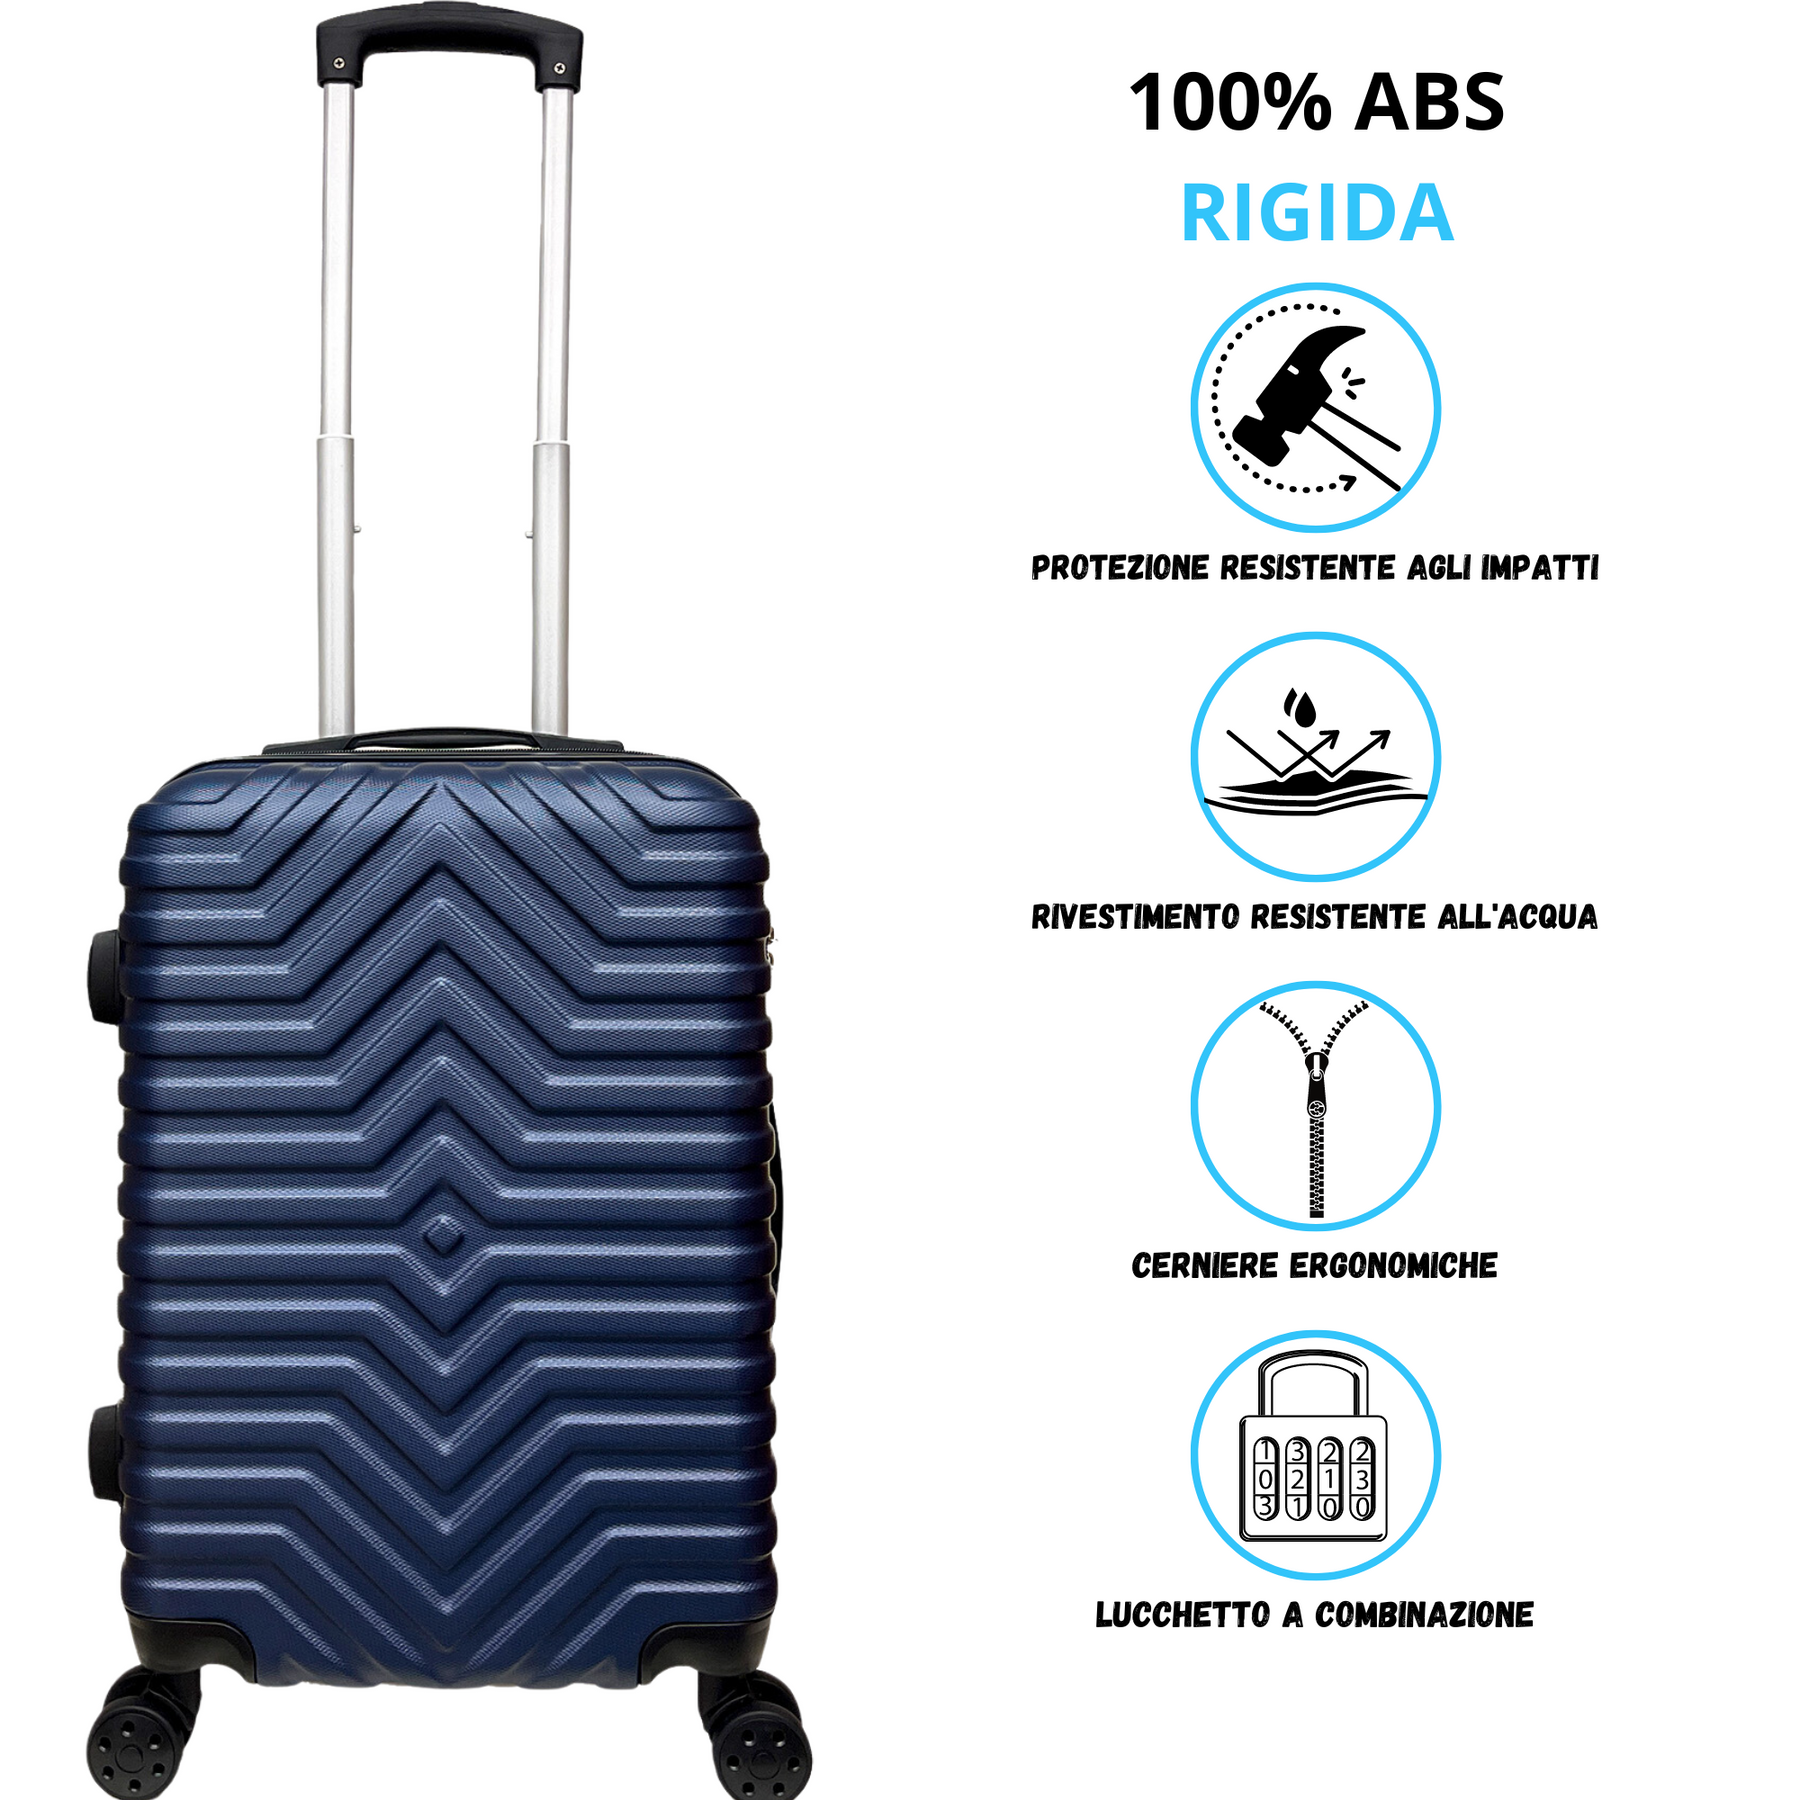 Grote harde bagage stijve bagage 55x37x22cm ultralicht in ABS - Houd bagage vast